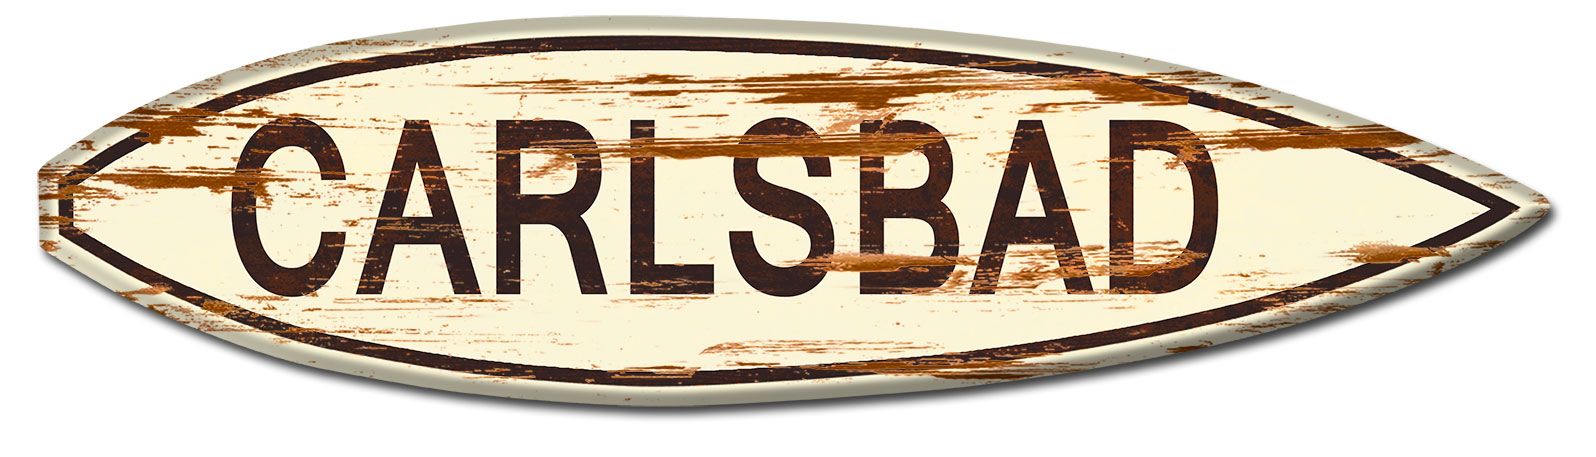 Carlsbad Surf Board Wood Print Vintage Sign